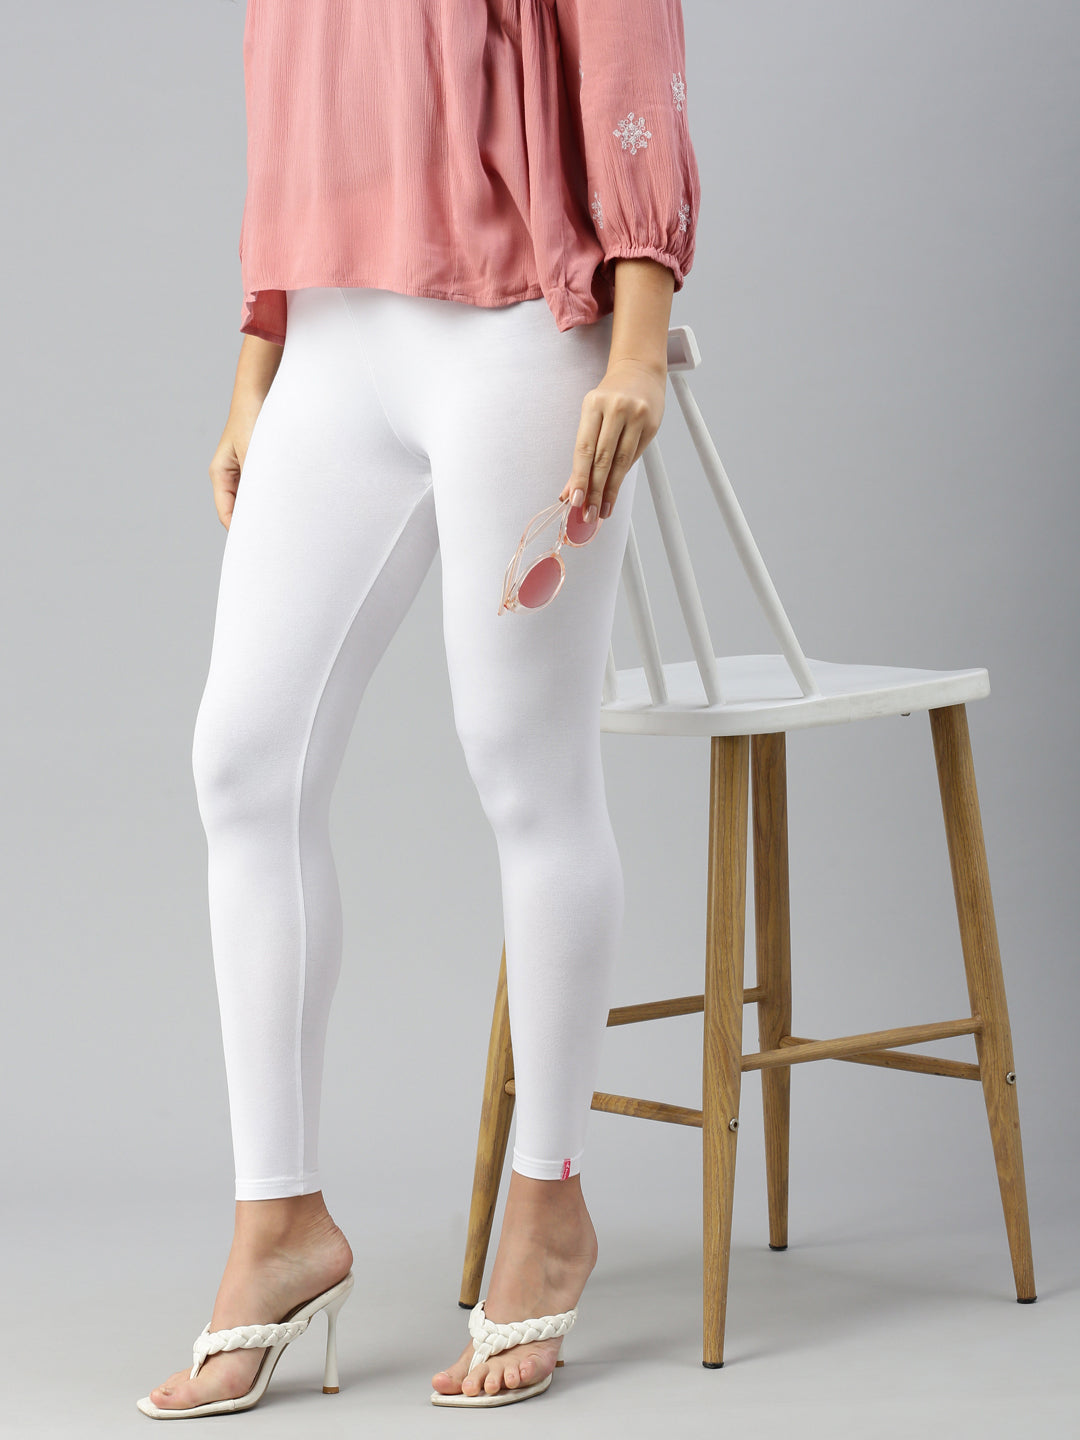 Buy KEYA LEGGINGS Women's Cotton Lycra Ankle Length Leggings (Pink and  Magenta, Free Size) - Pack of 2 at Amazon.in